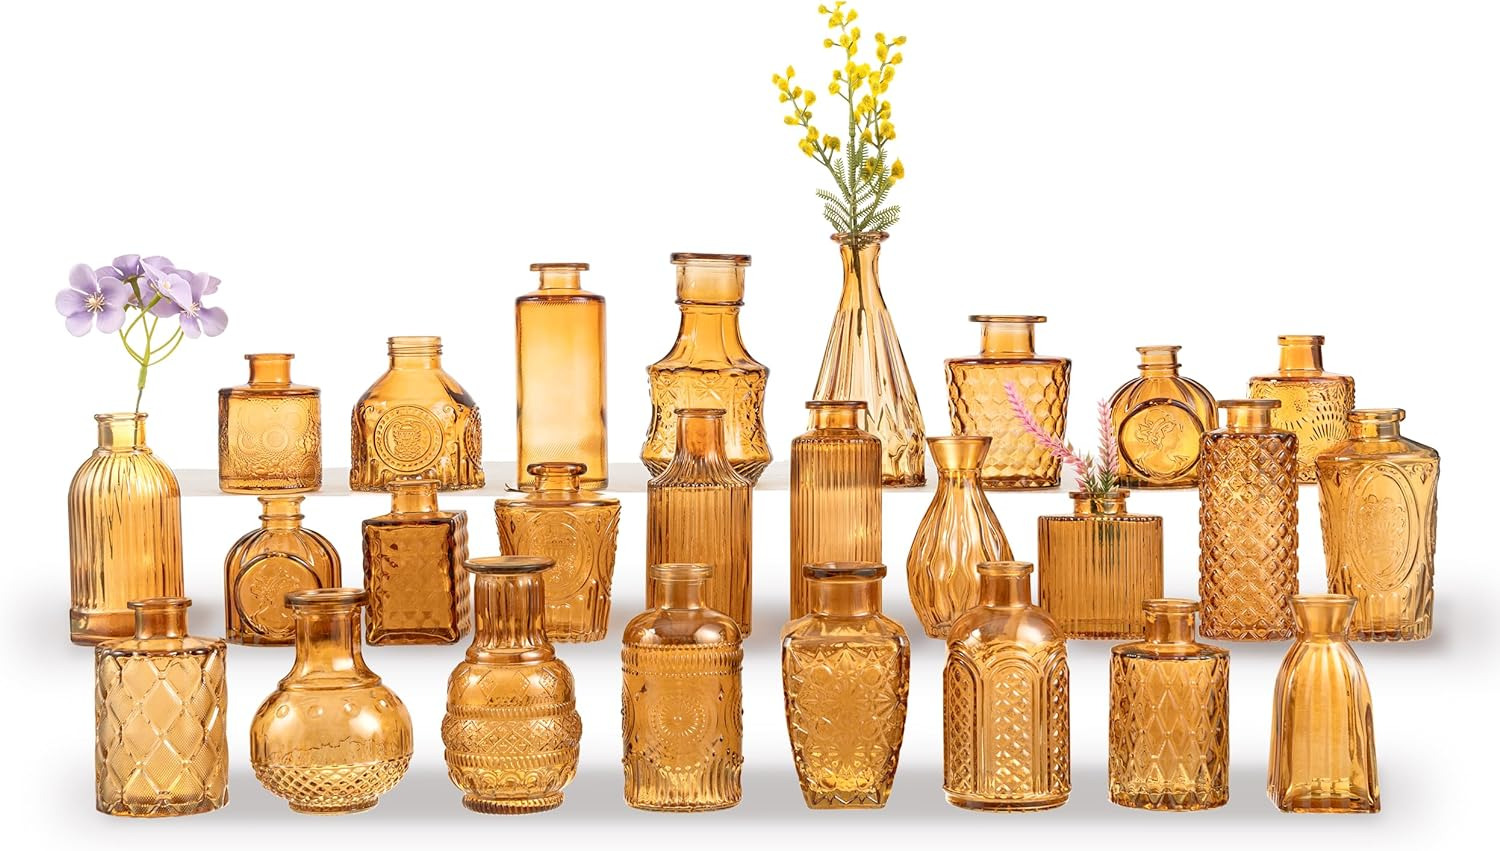 Glass Bud Vases Set of 26, Small Clear Vases for Flowers, Mini Vintage Bud Vases